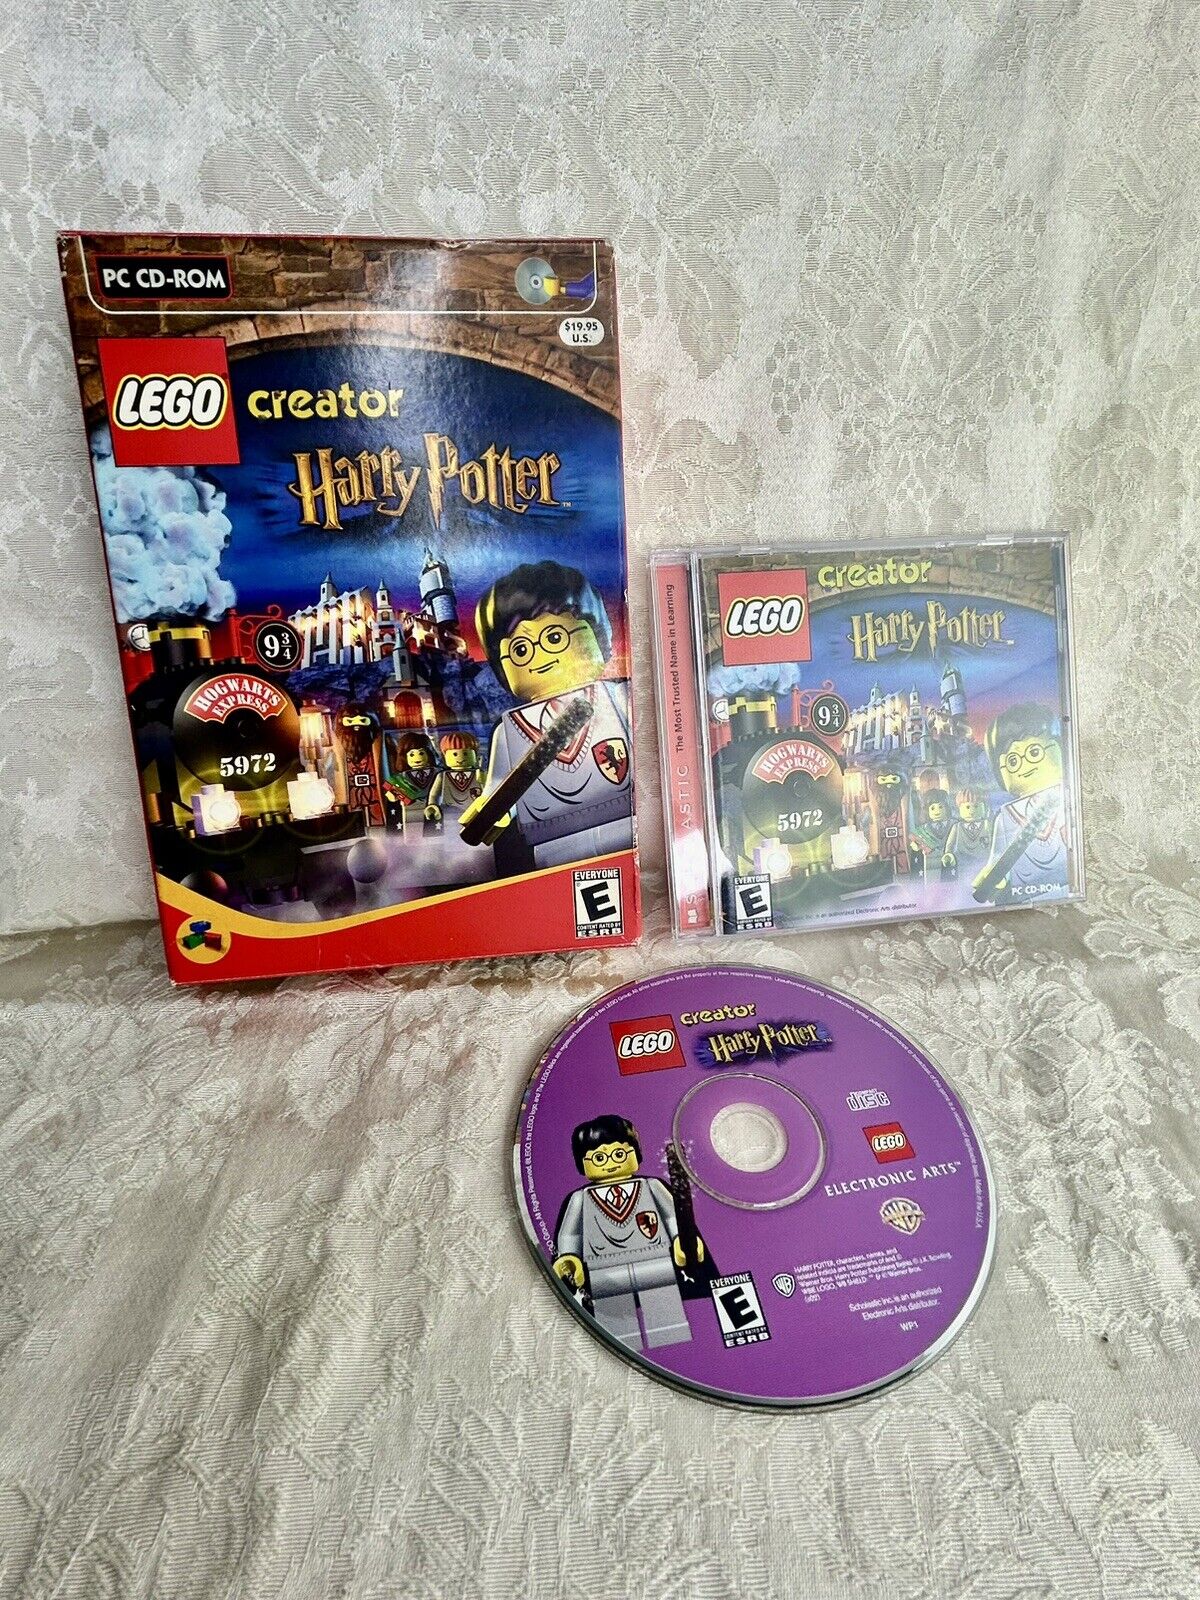 Lego Creator Harry Potter CD-ROM for PC 2001 RARE VHTF Retro Tech